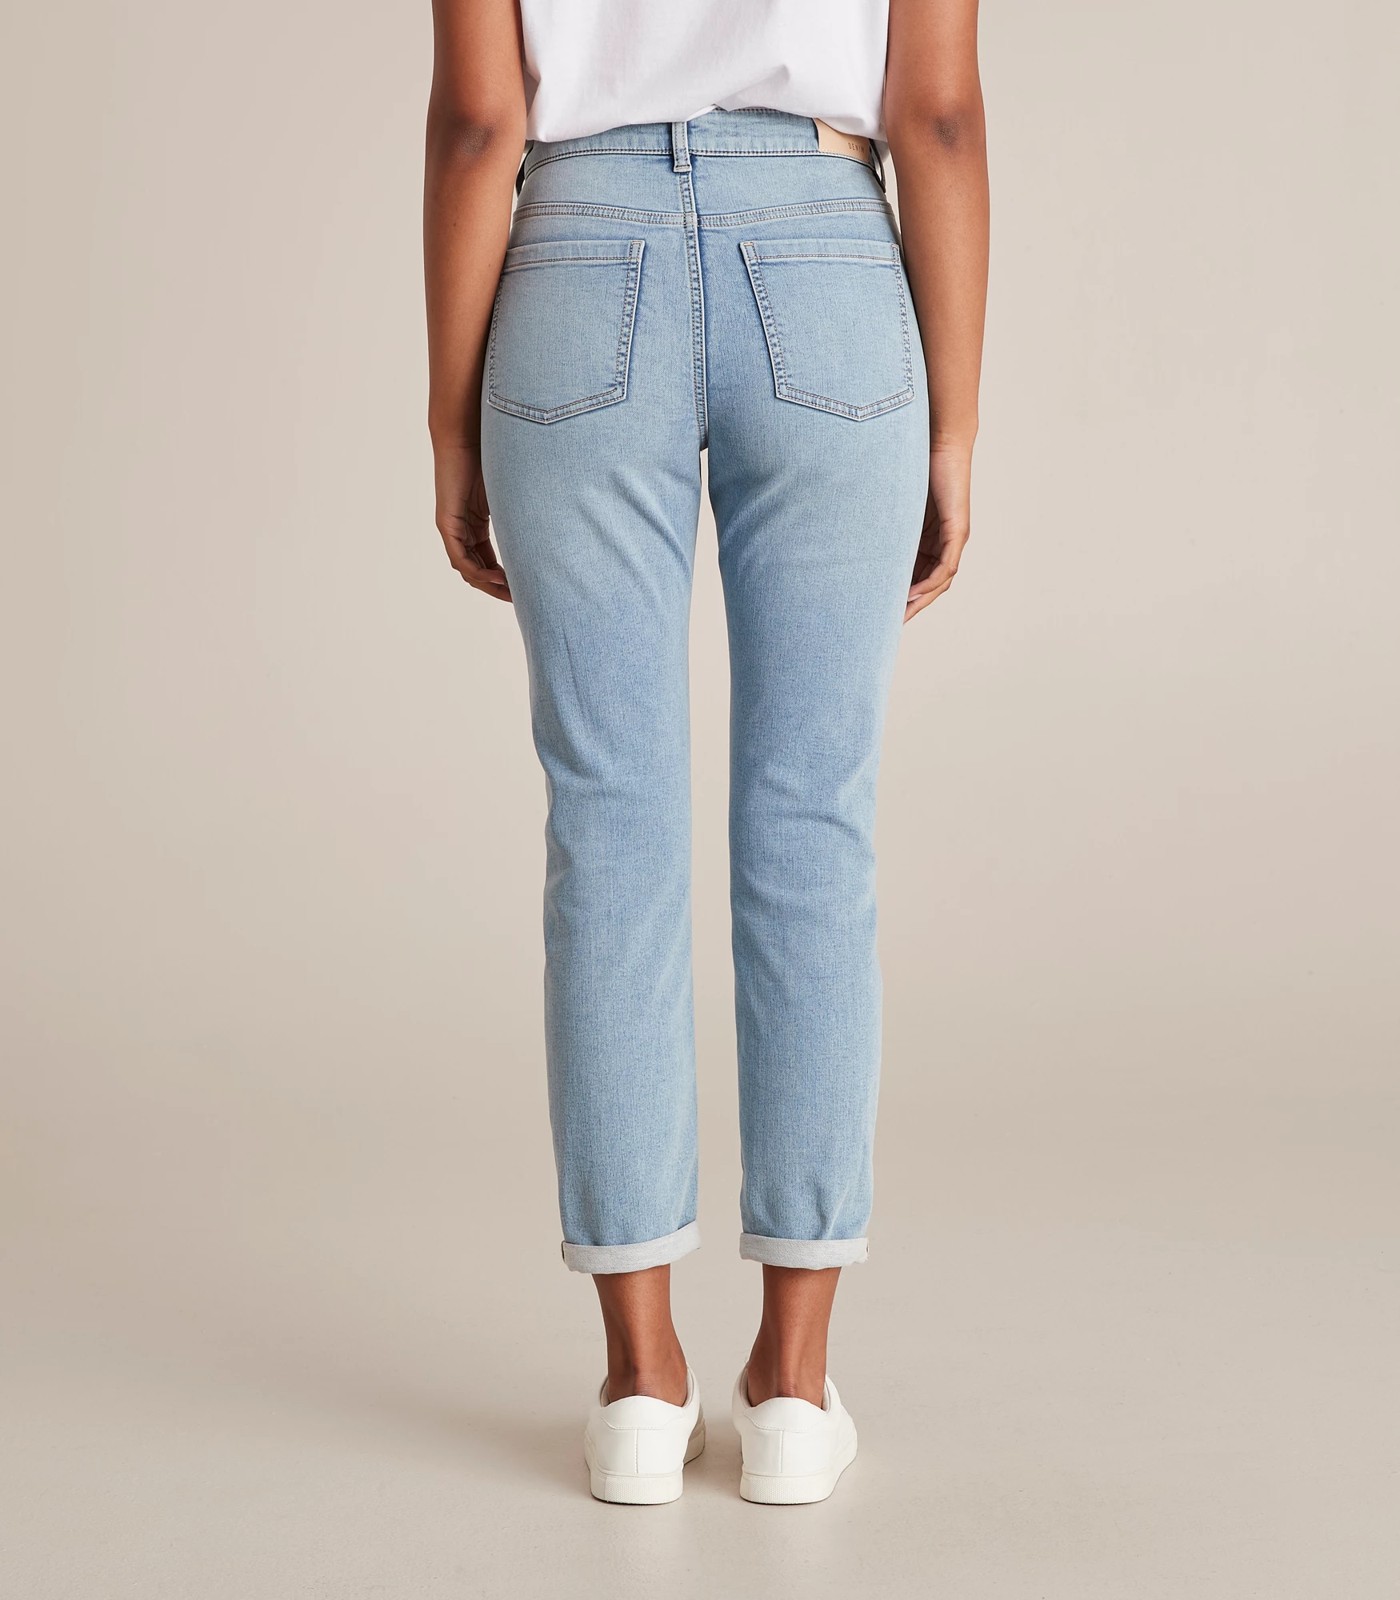 Tash Wonder Denim Mid Rise Ankle Length Girlfriend Jeans | Target Australia